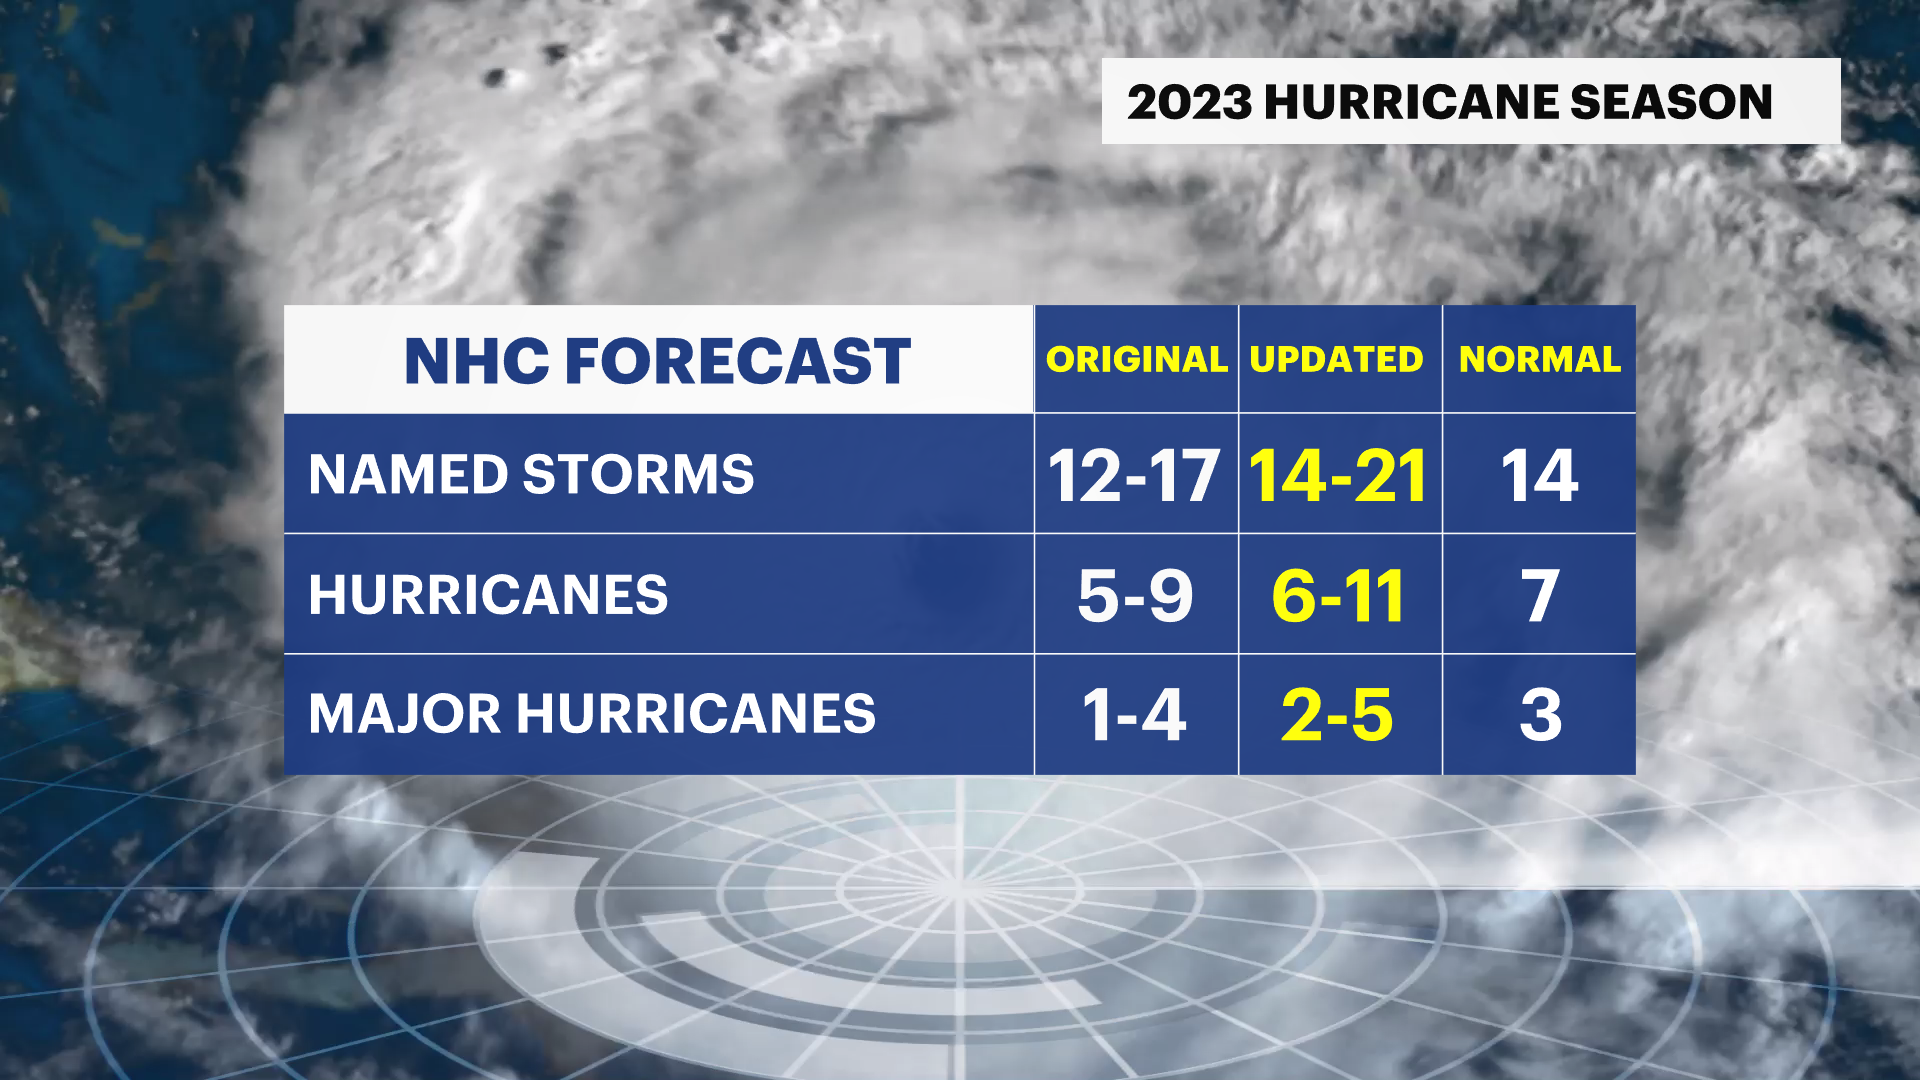 National Hurricane Center forecasts a more active hurricane season for 2023